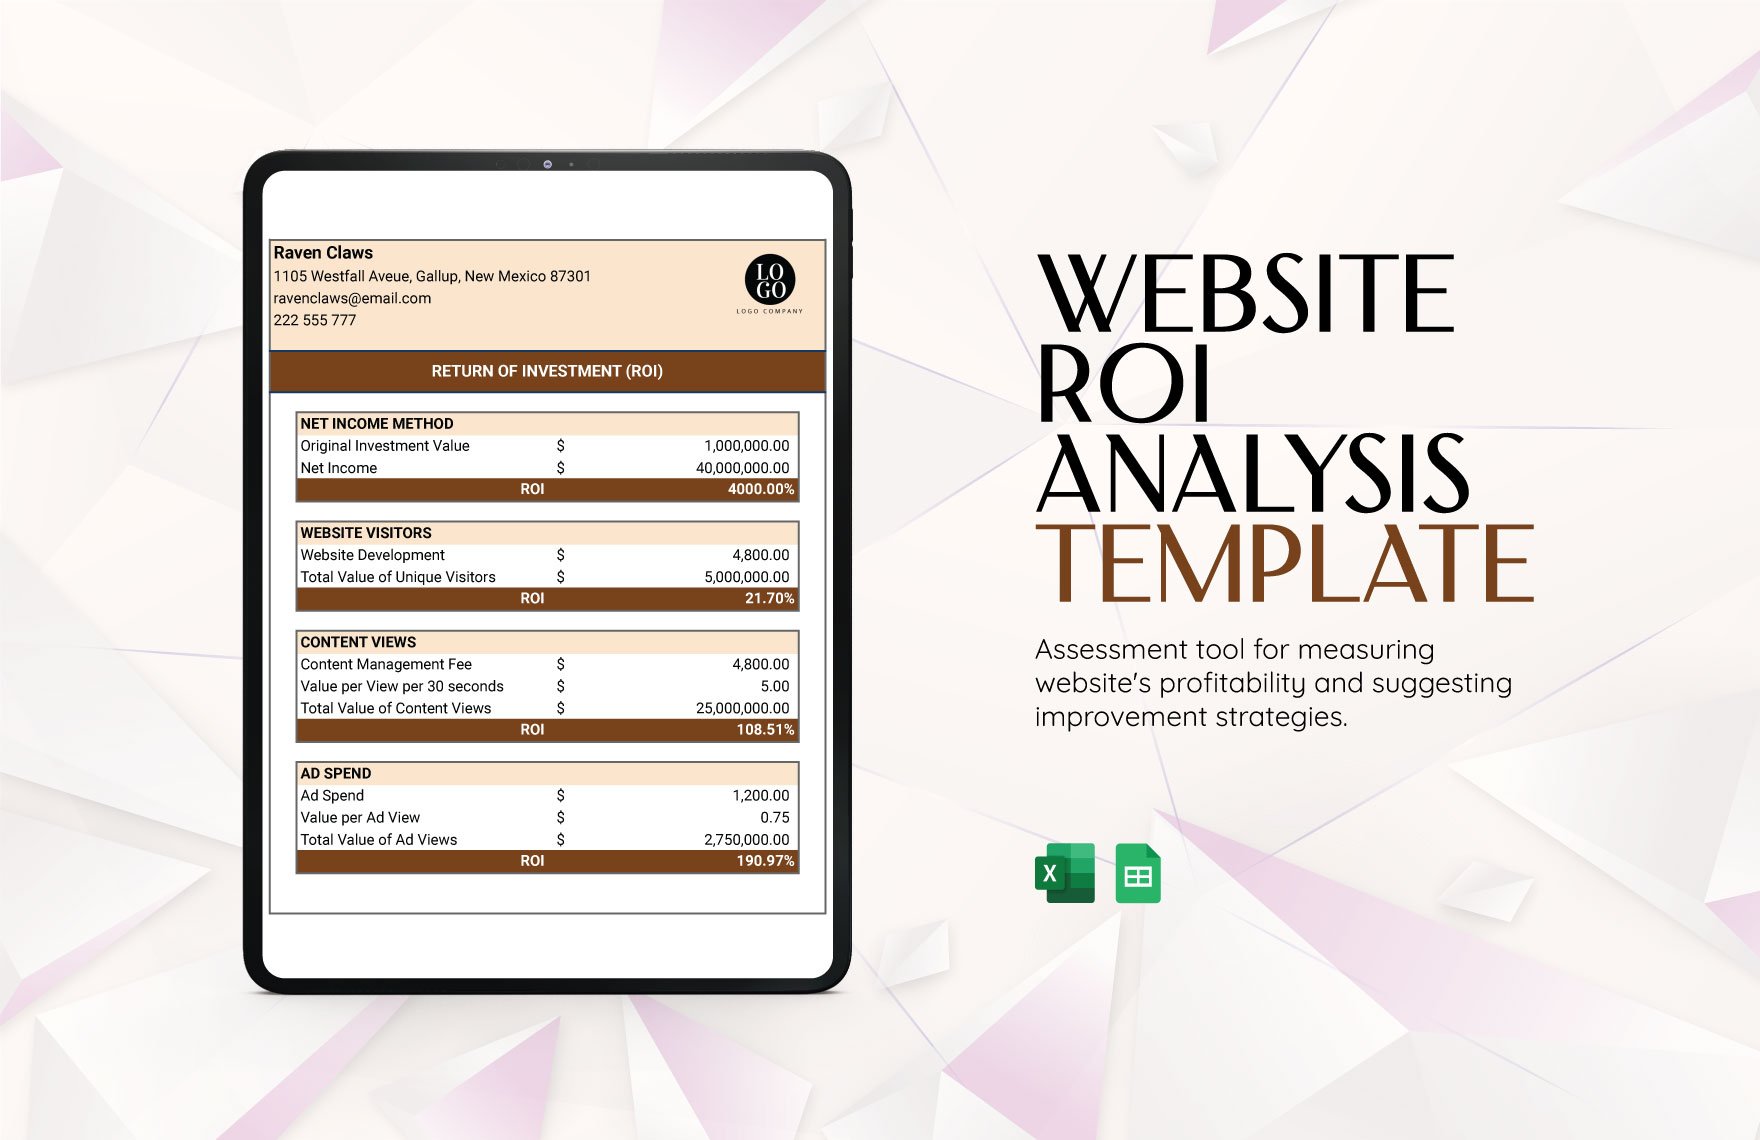 Website ROI Analysis Template